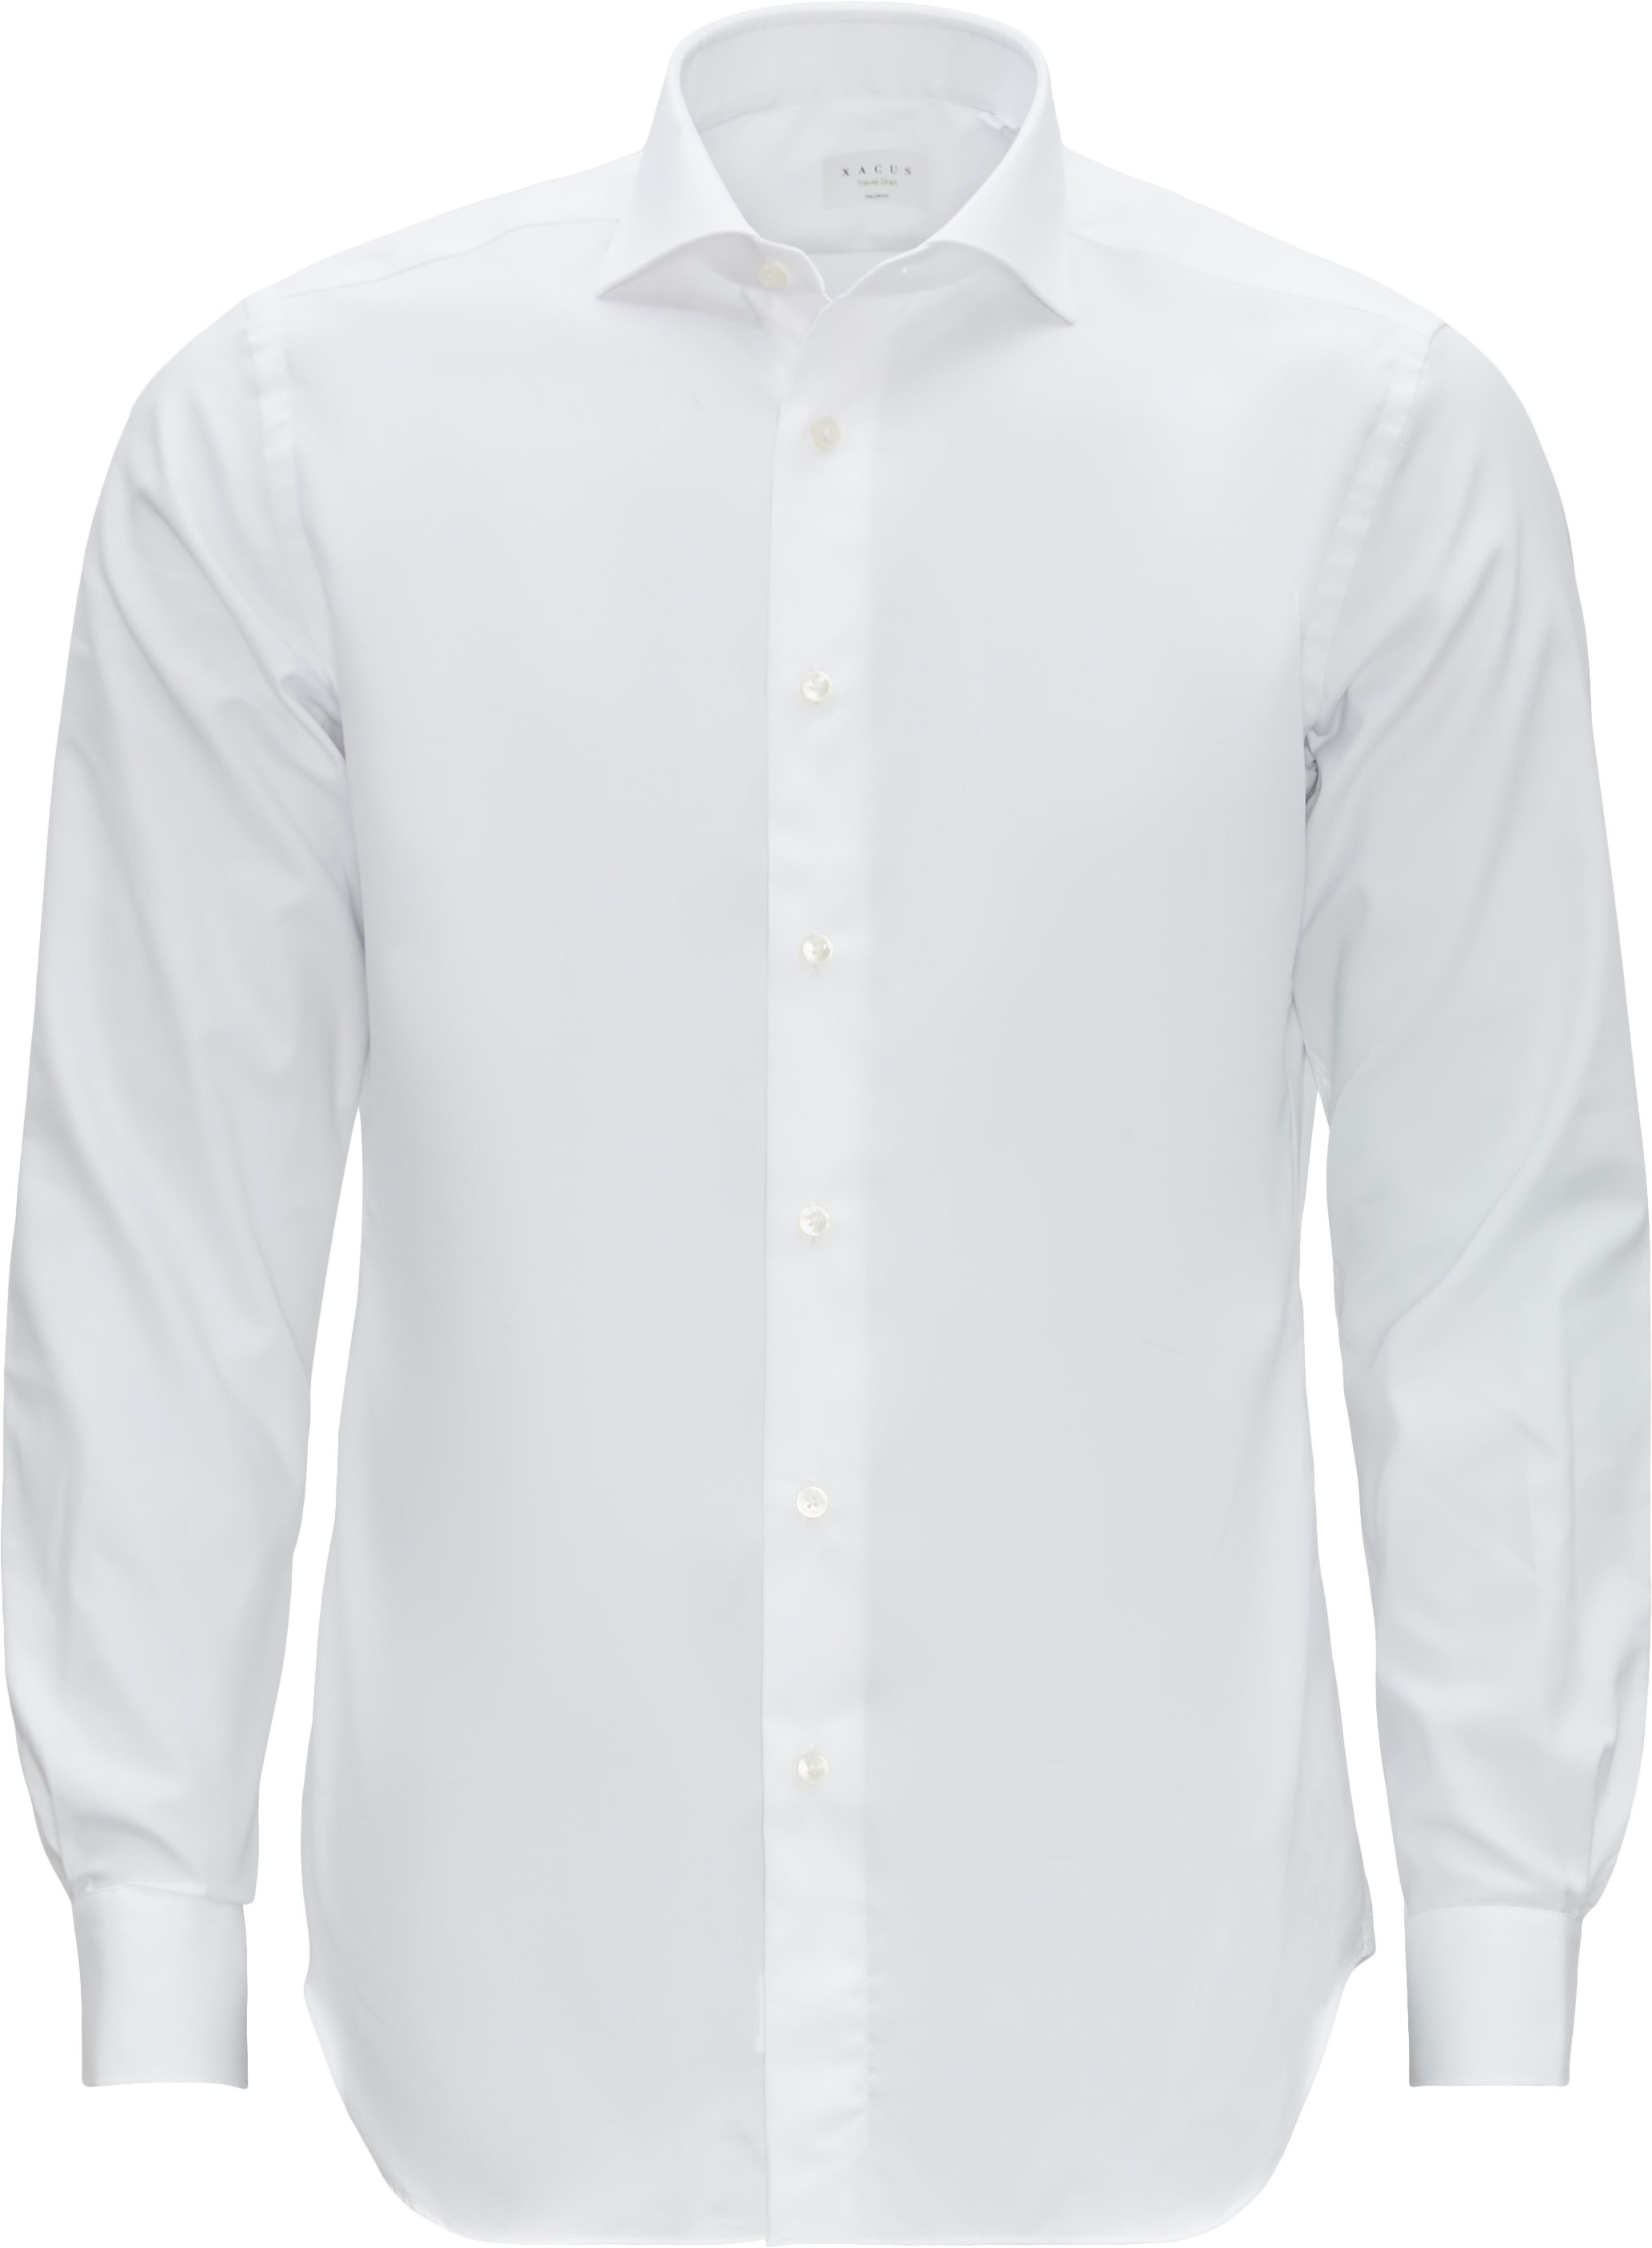 Xacus Shirts 11391 526 White